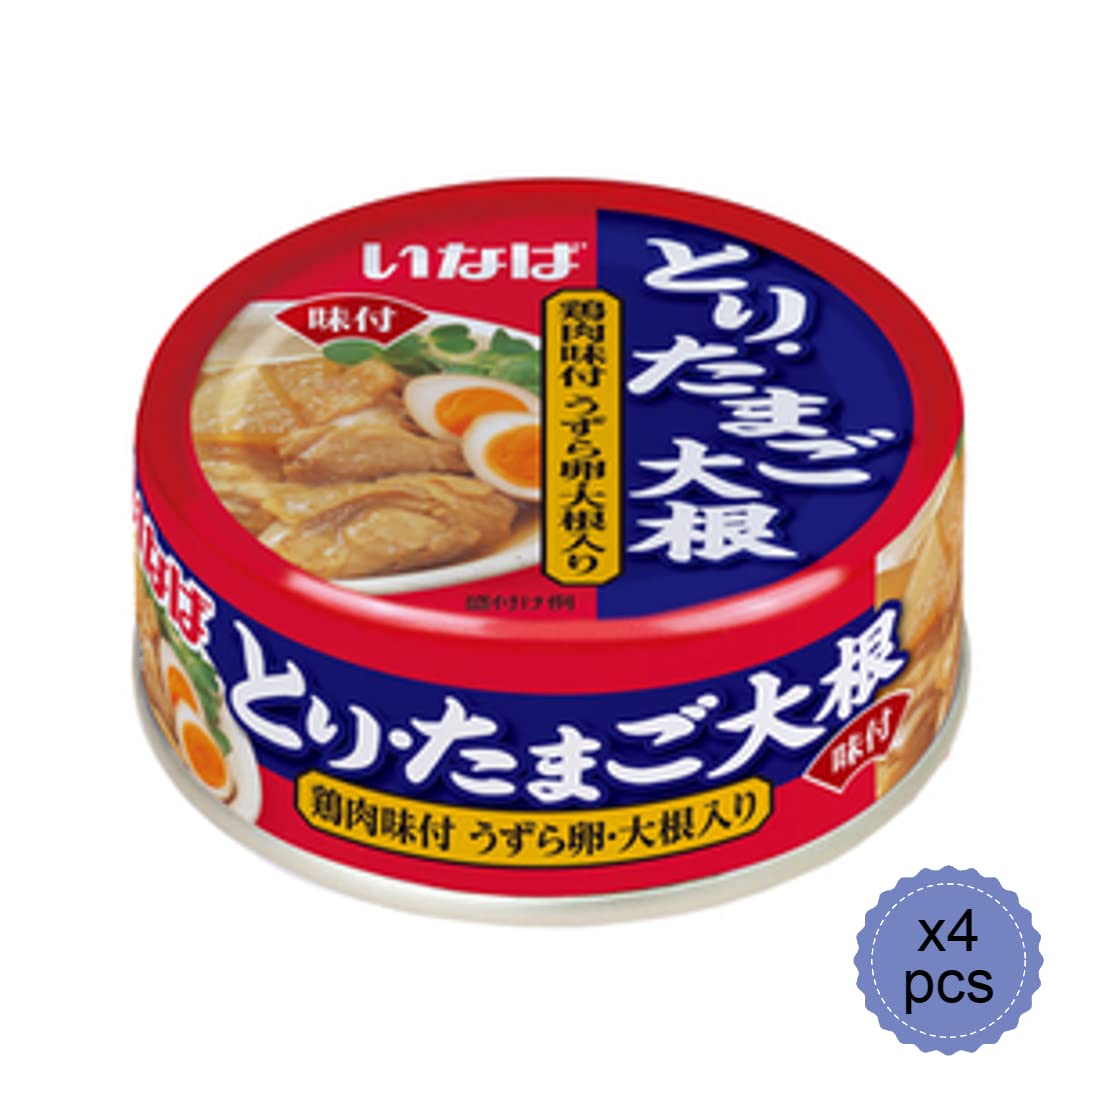 "Canned Side Dishes" Chicken Egg Radish 2.6oz 4pcs Japanese Canned Food Ninjapo